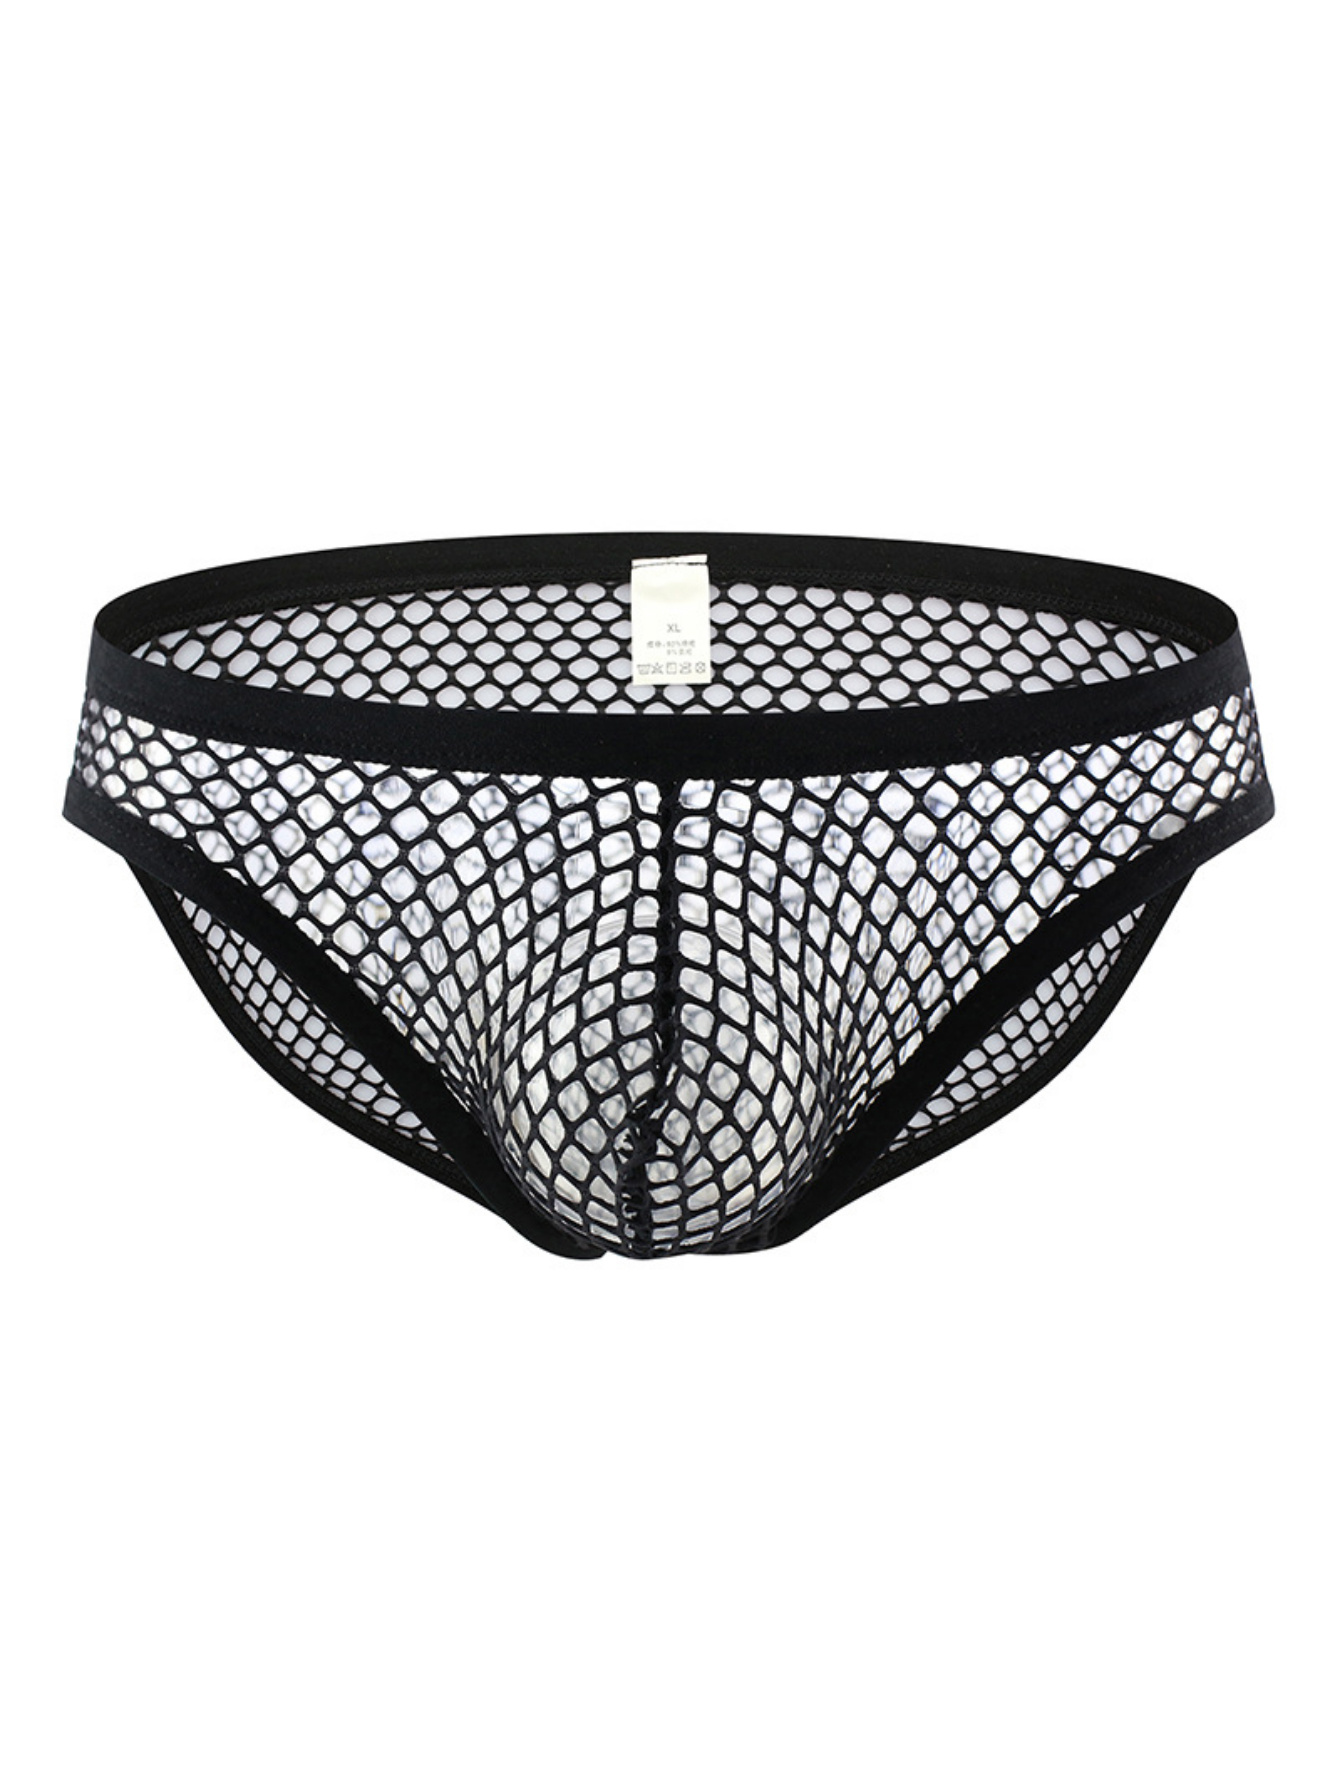 20pcs/50pcs Disposable Bras And Panties For Women, Disposable Underwear Spa  Bikini Thong Panties Sunless Spray Tan Top Underwear